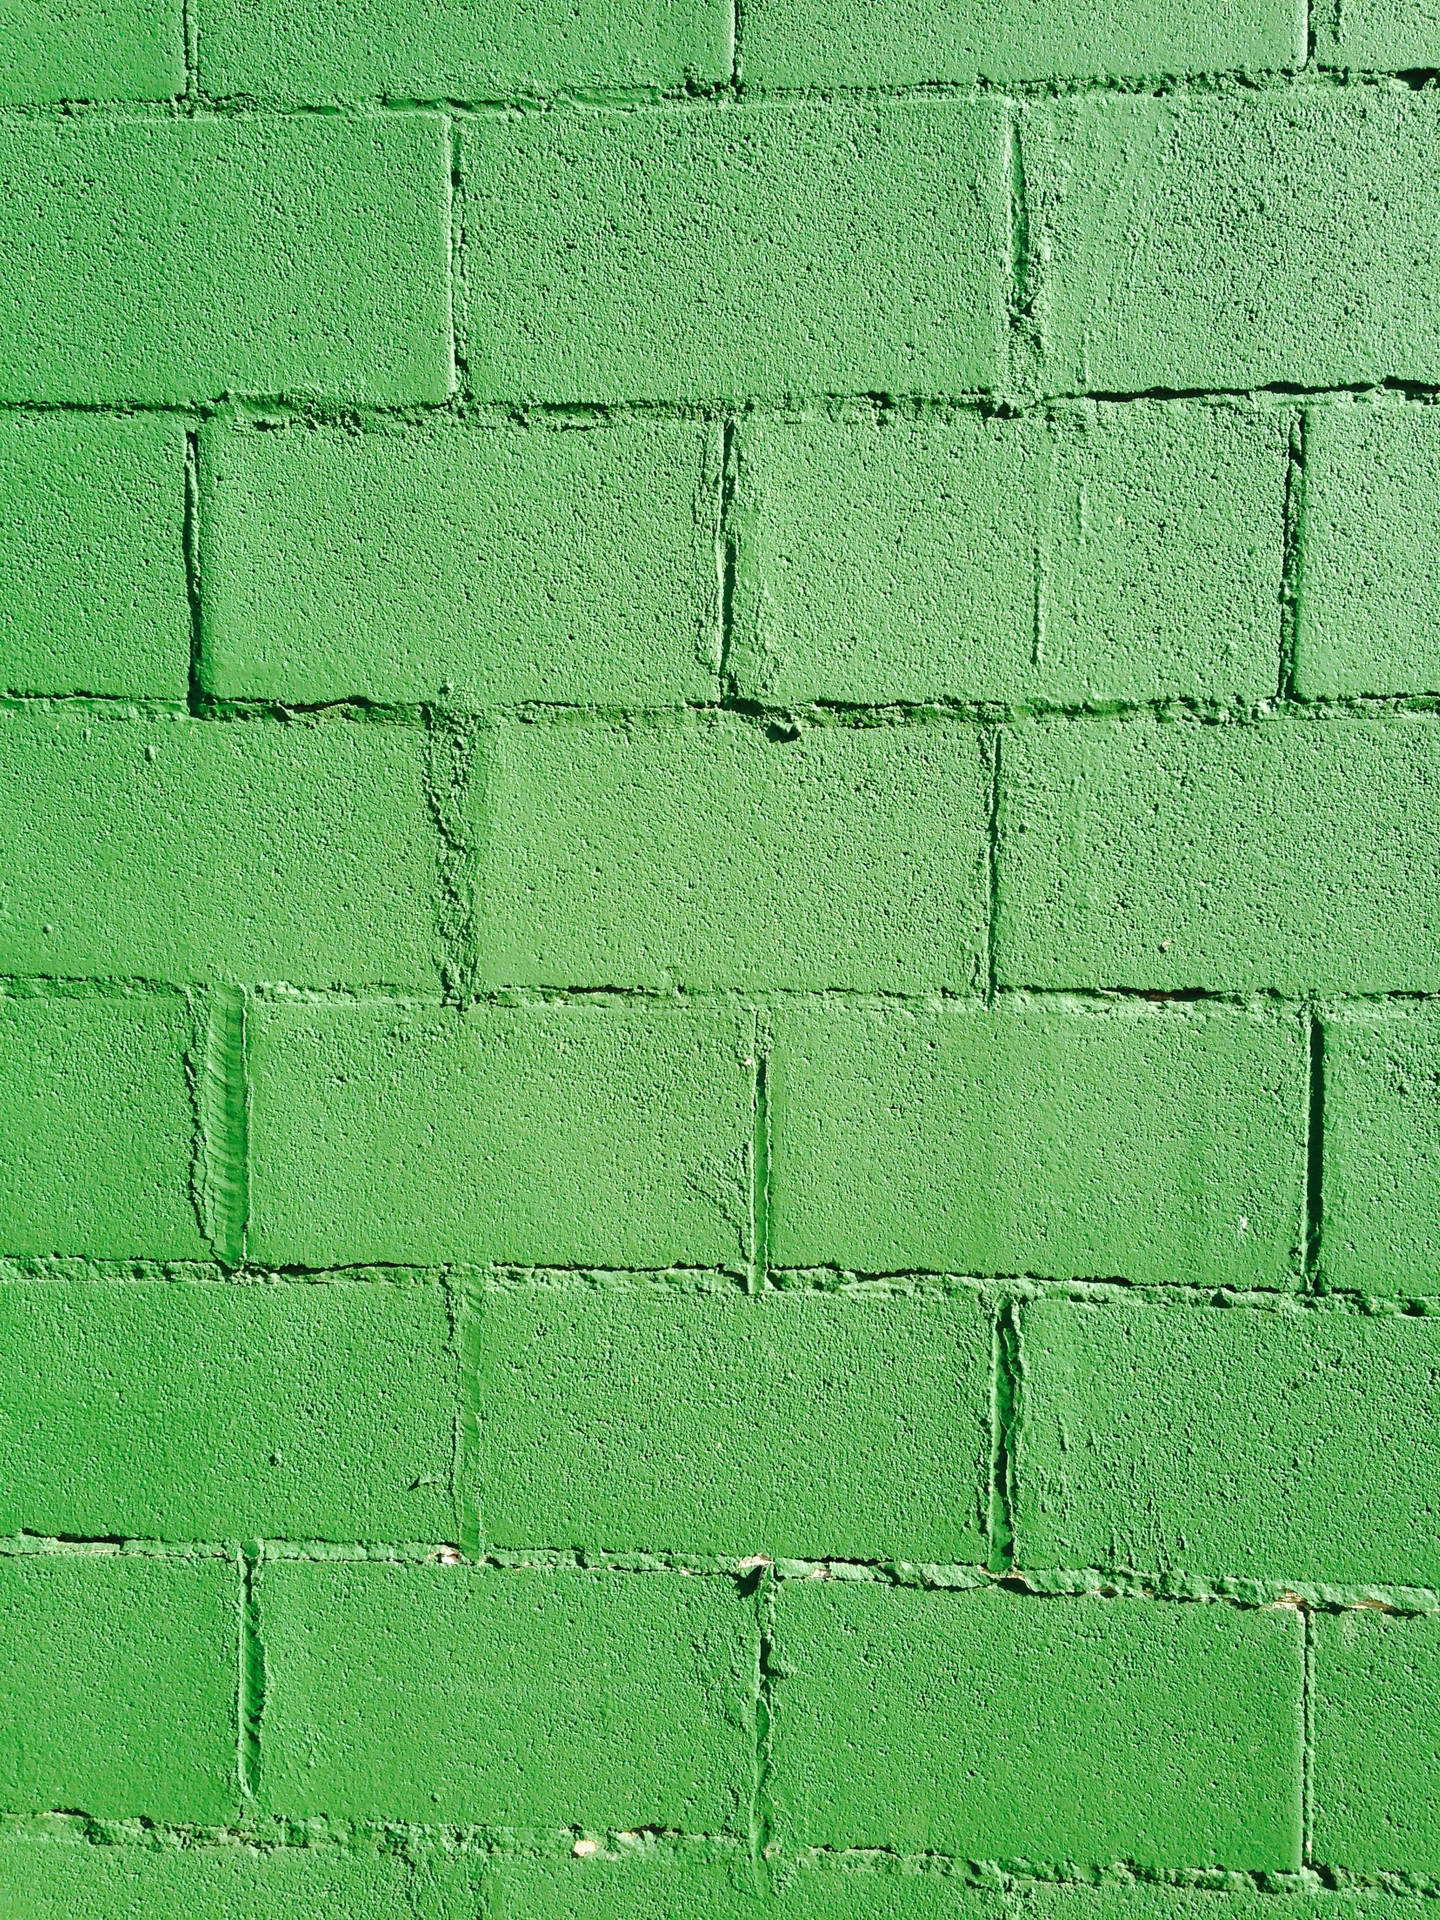 Brick 2448X3264 wallpaper